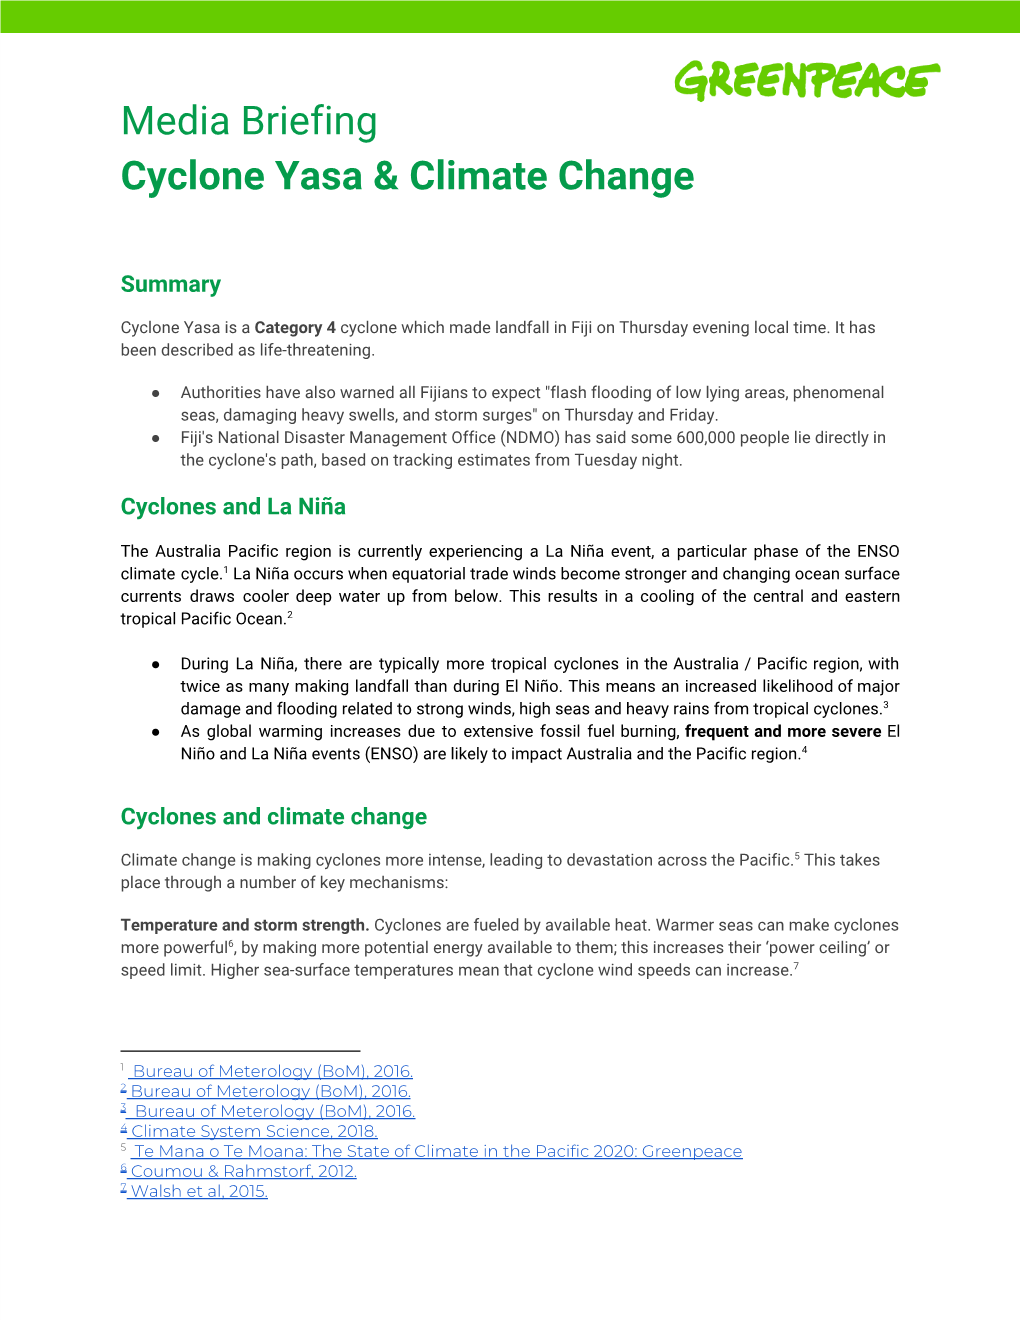 Media Briefing Cyclone Yasa & Climate Change